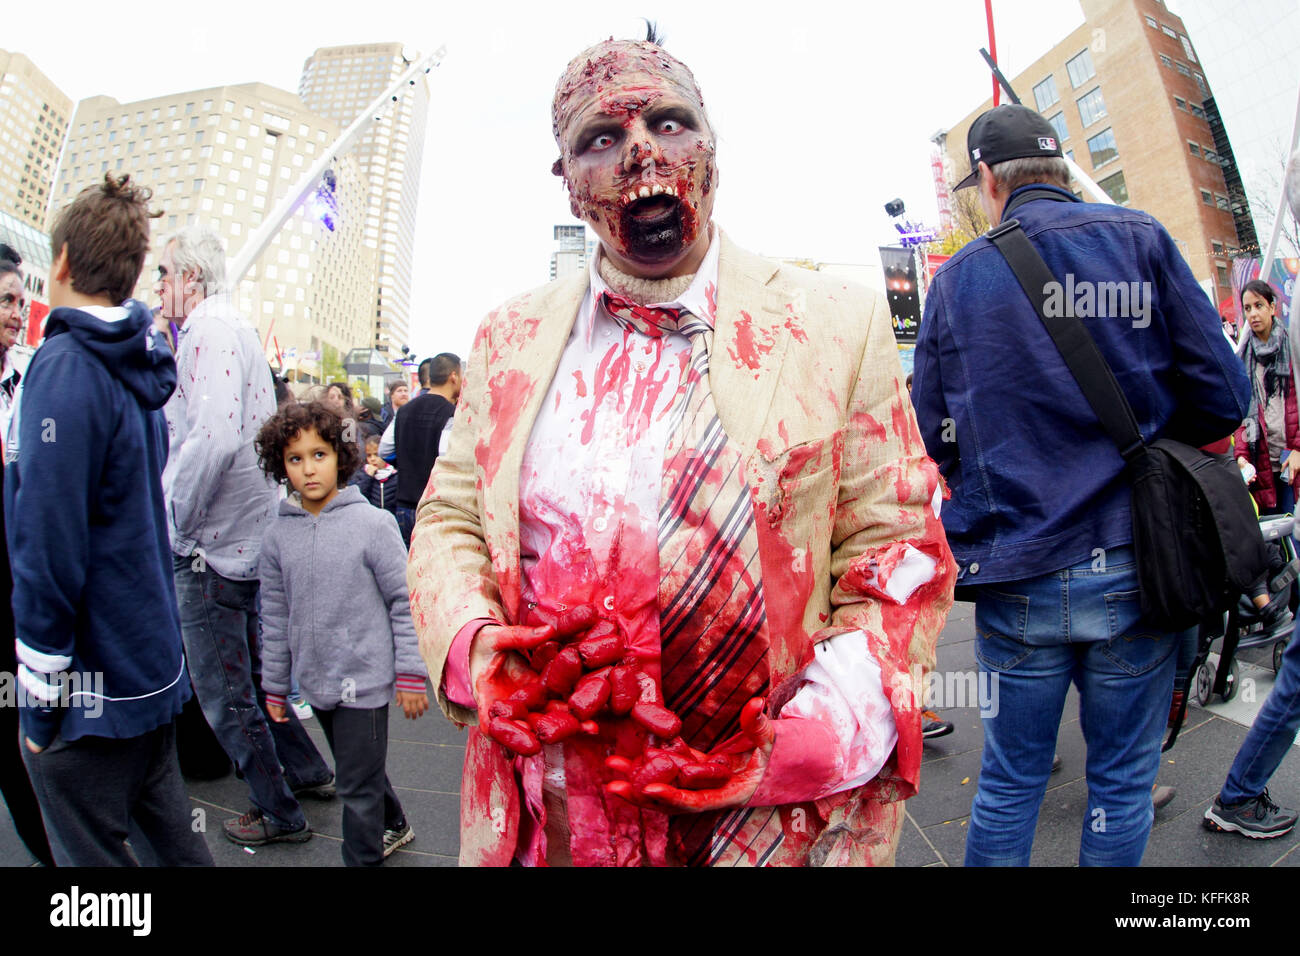 Montreal, Canadá. 28 de octubre de 2017. participante del 2017 Montreal zombie walk. Crédito: Mario Beauregard beaustock/alamy live news Foto de stock